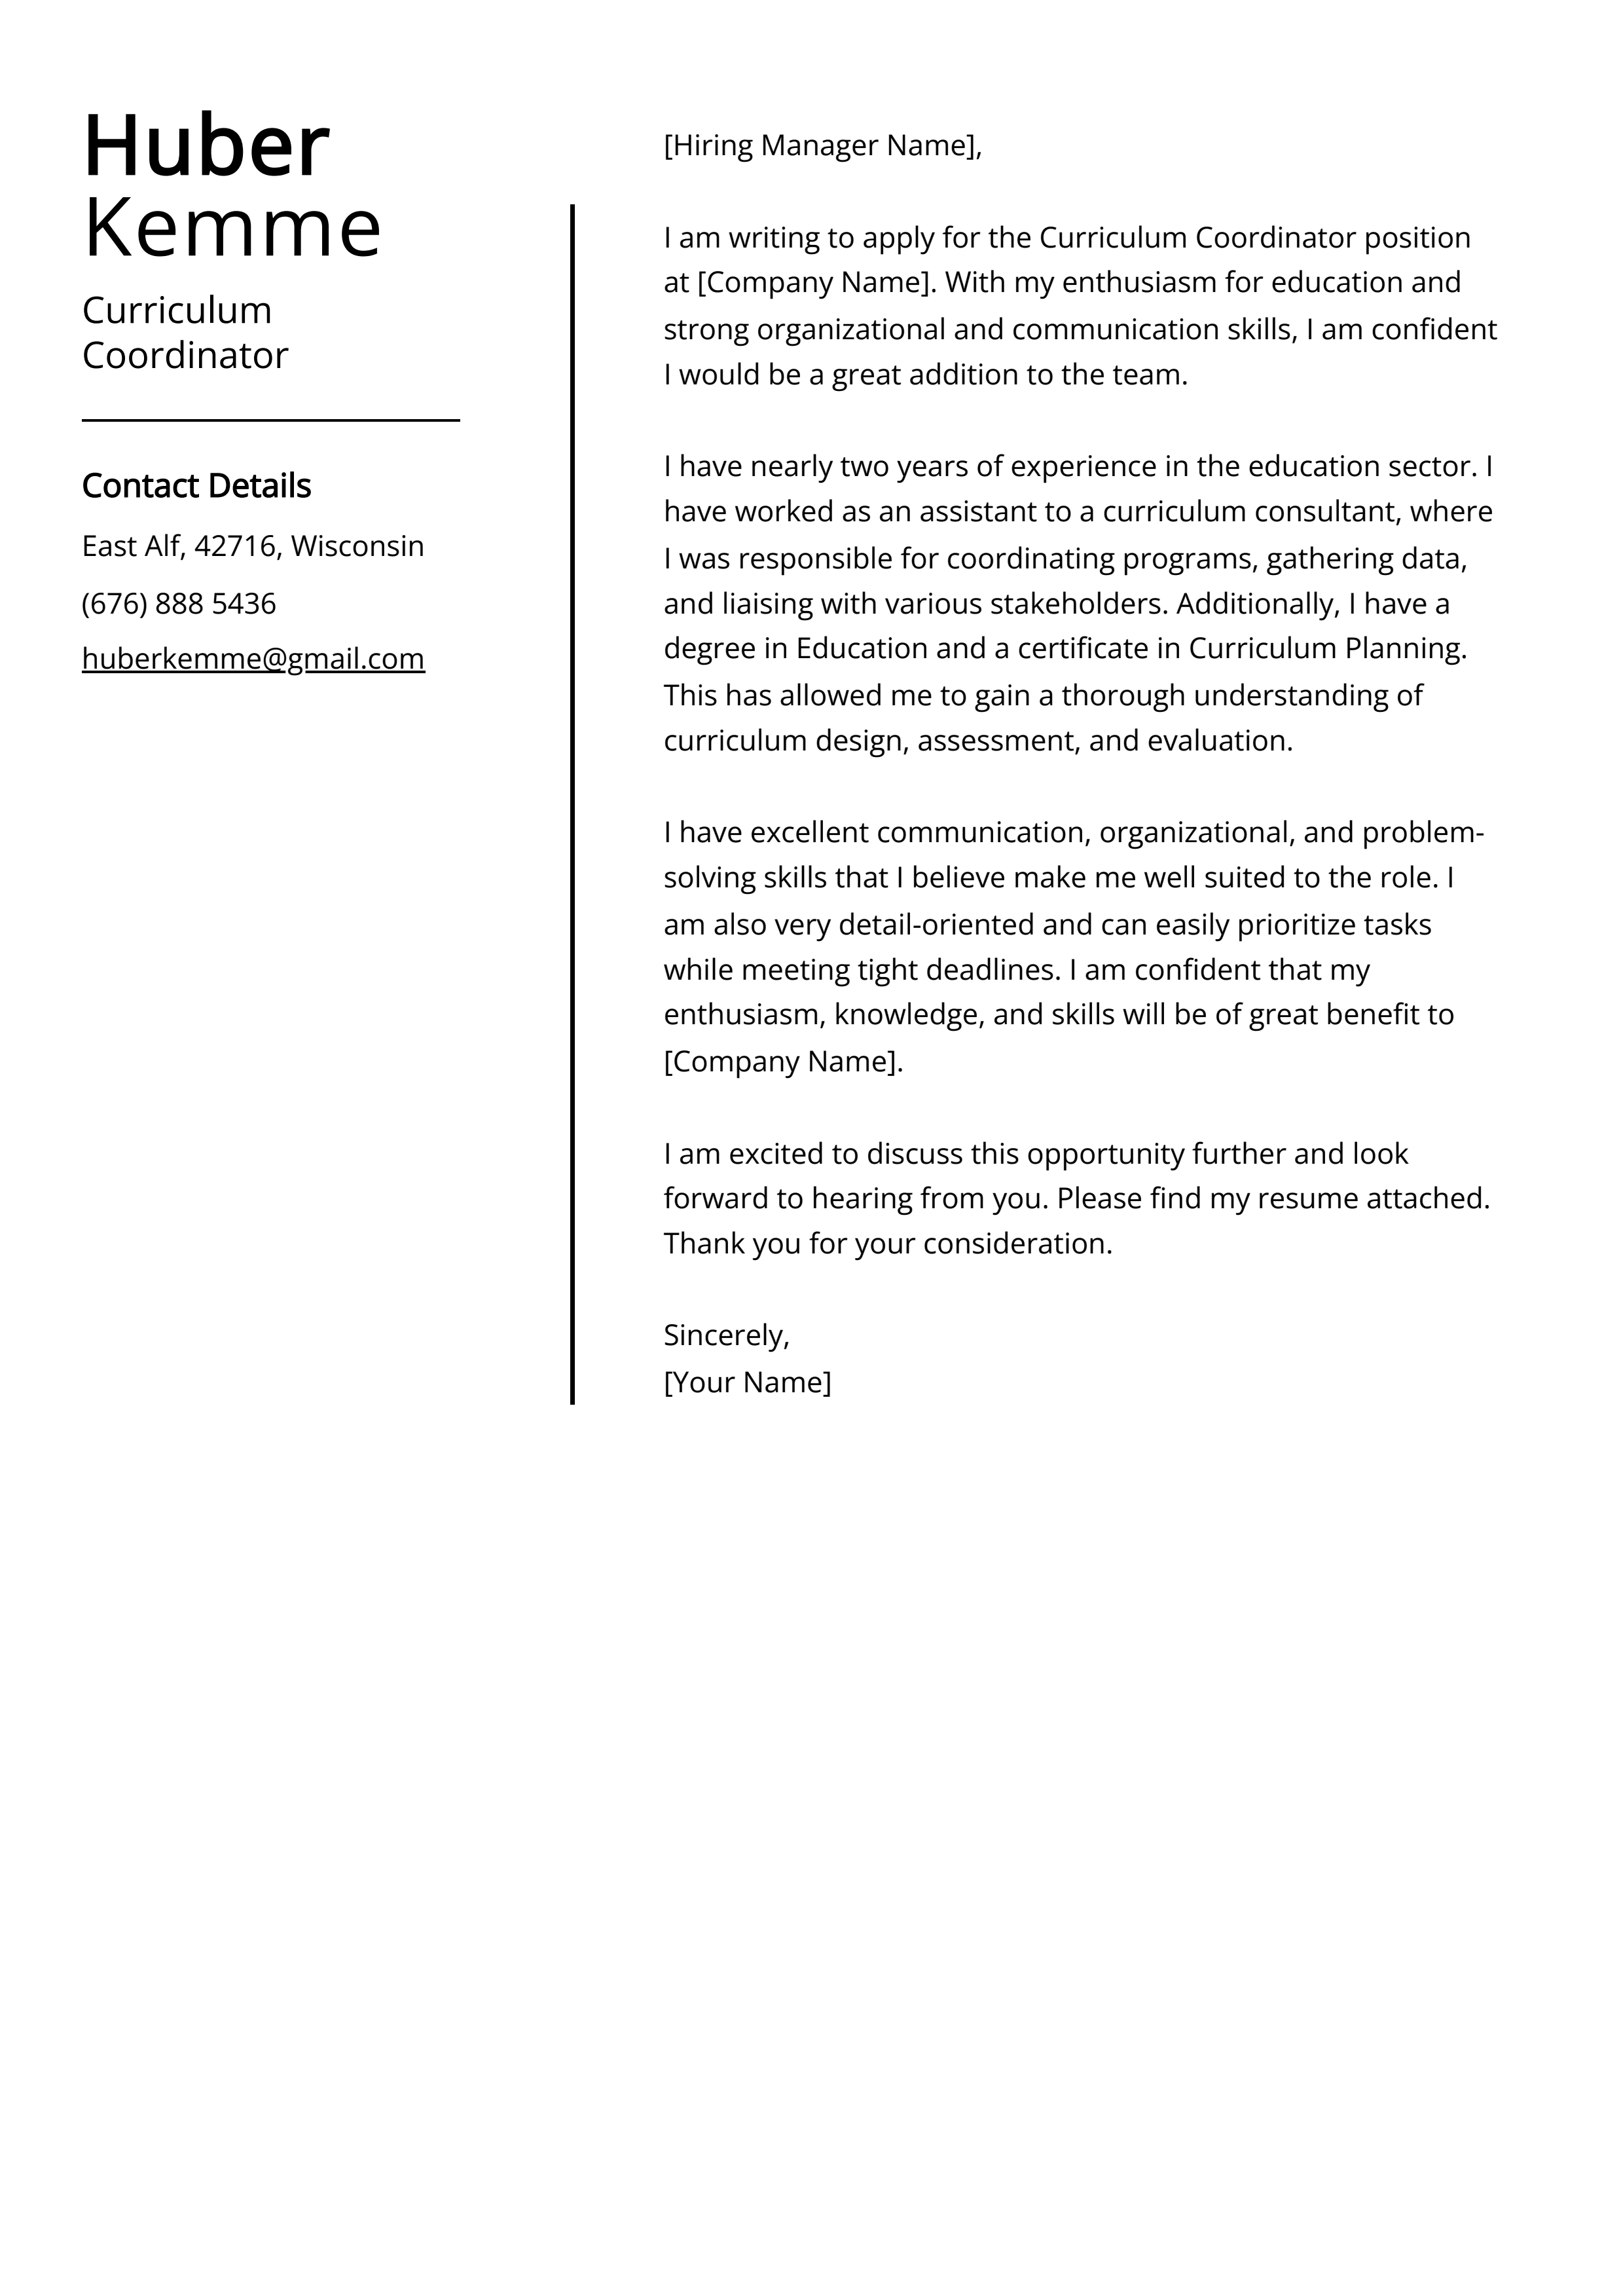 Curriculum Coordinator Cover Letter Example